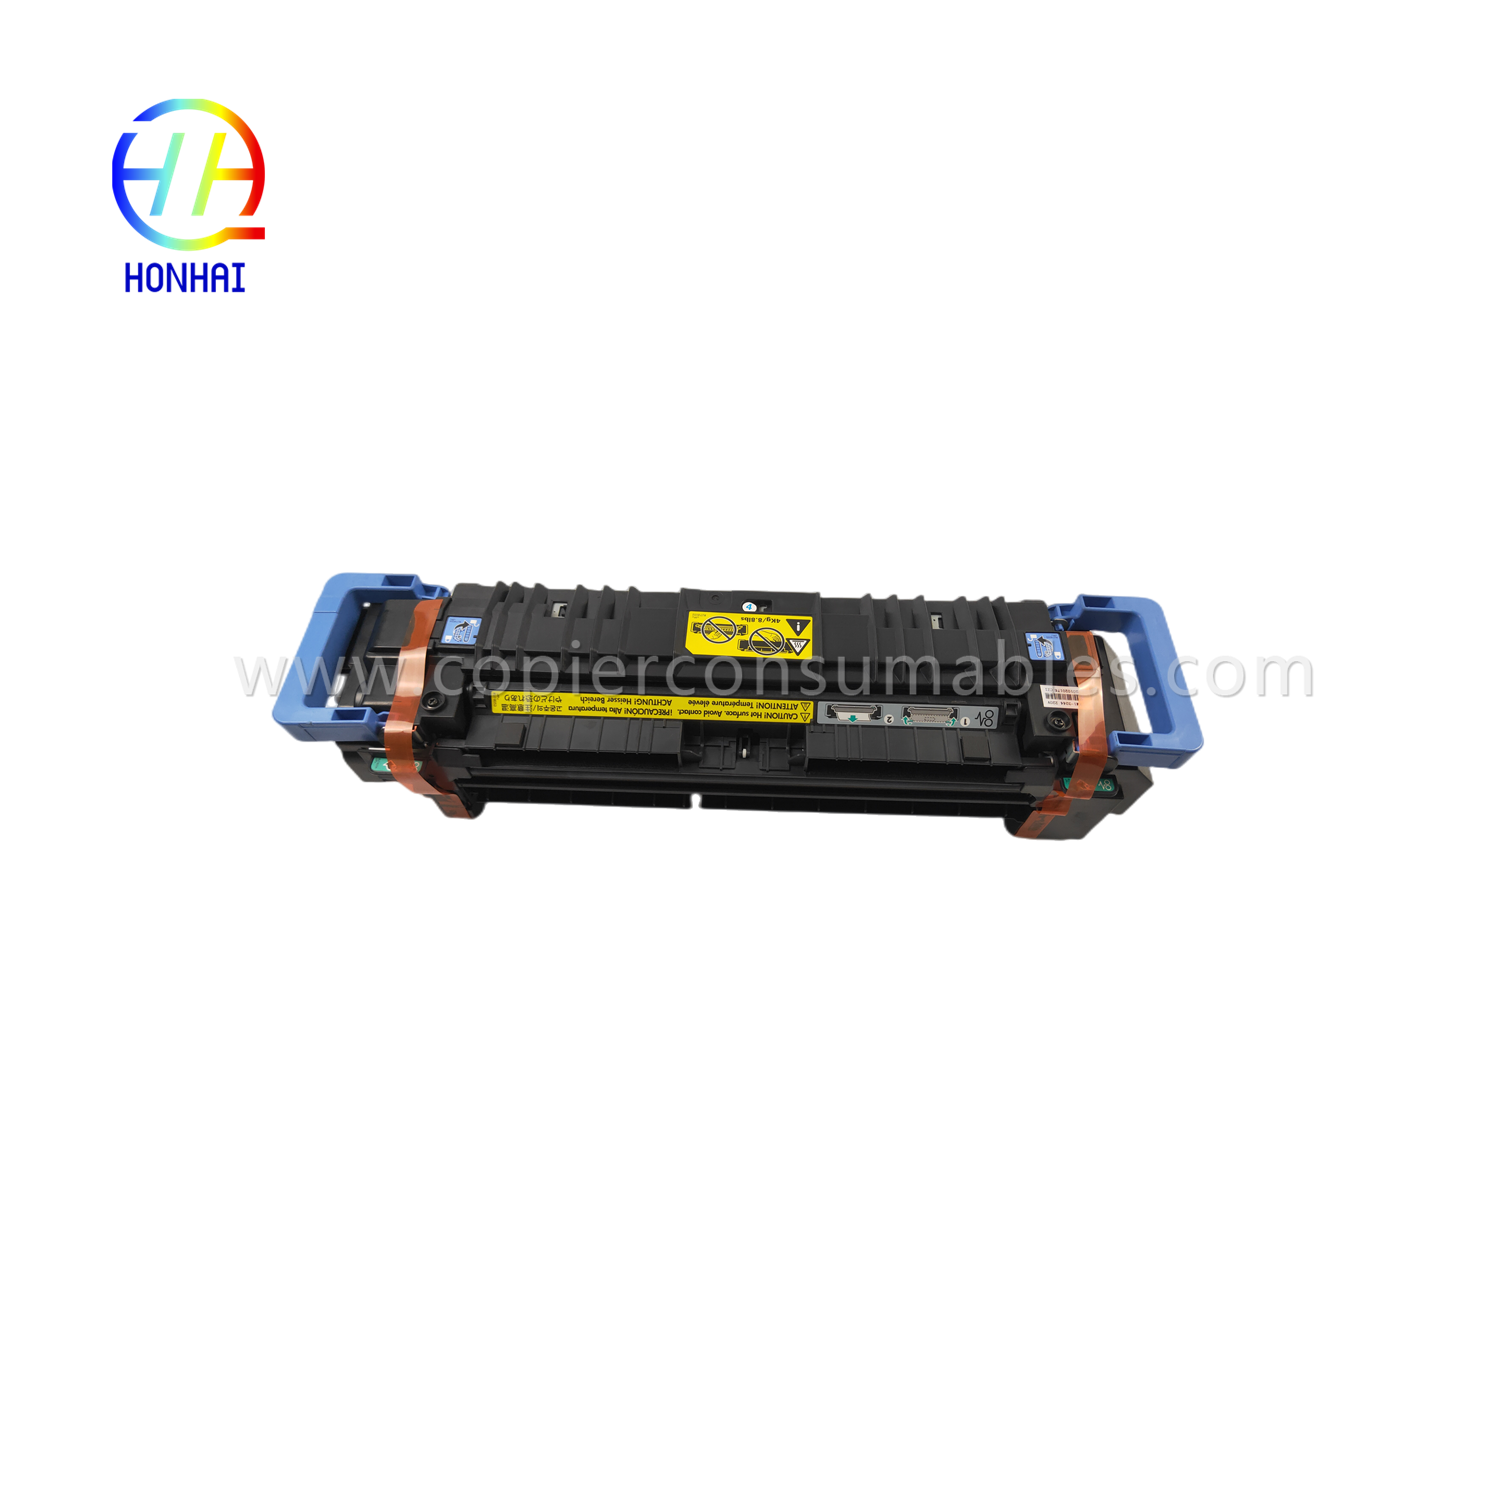 https://c585.goodao.net/fuser-assembly-unit-for-hp-m855-m880-m855dn-m855xh-m880z-m880z-c1n54-67901-c1n58-67901-fusing-assy-fixing/